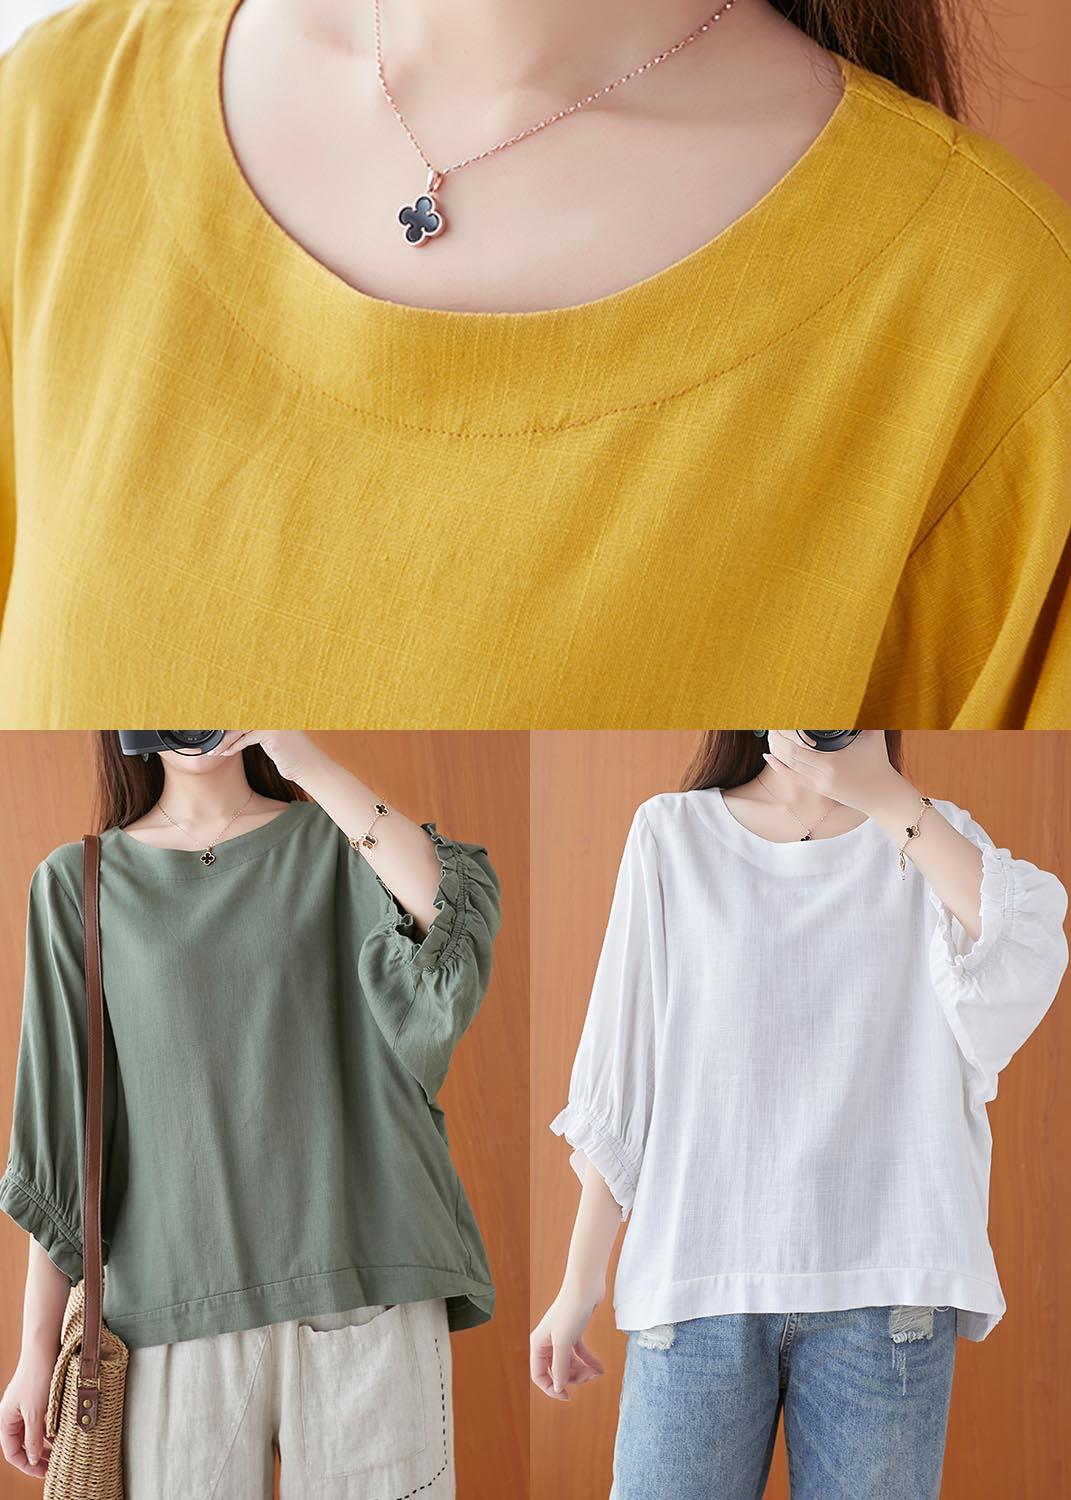 Women Yellow Ruffled Cotton Summer Shirt Top ( Limited Stock) - Omychic